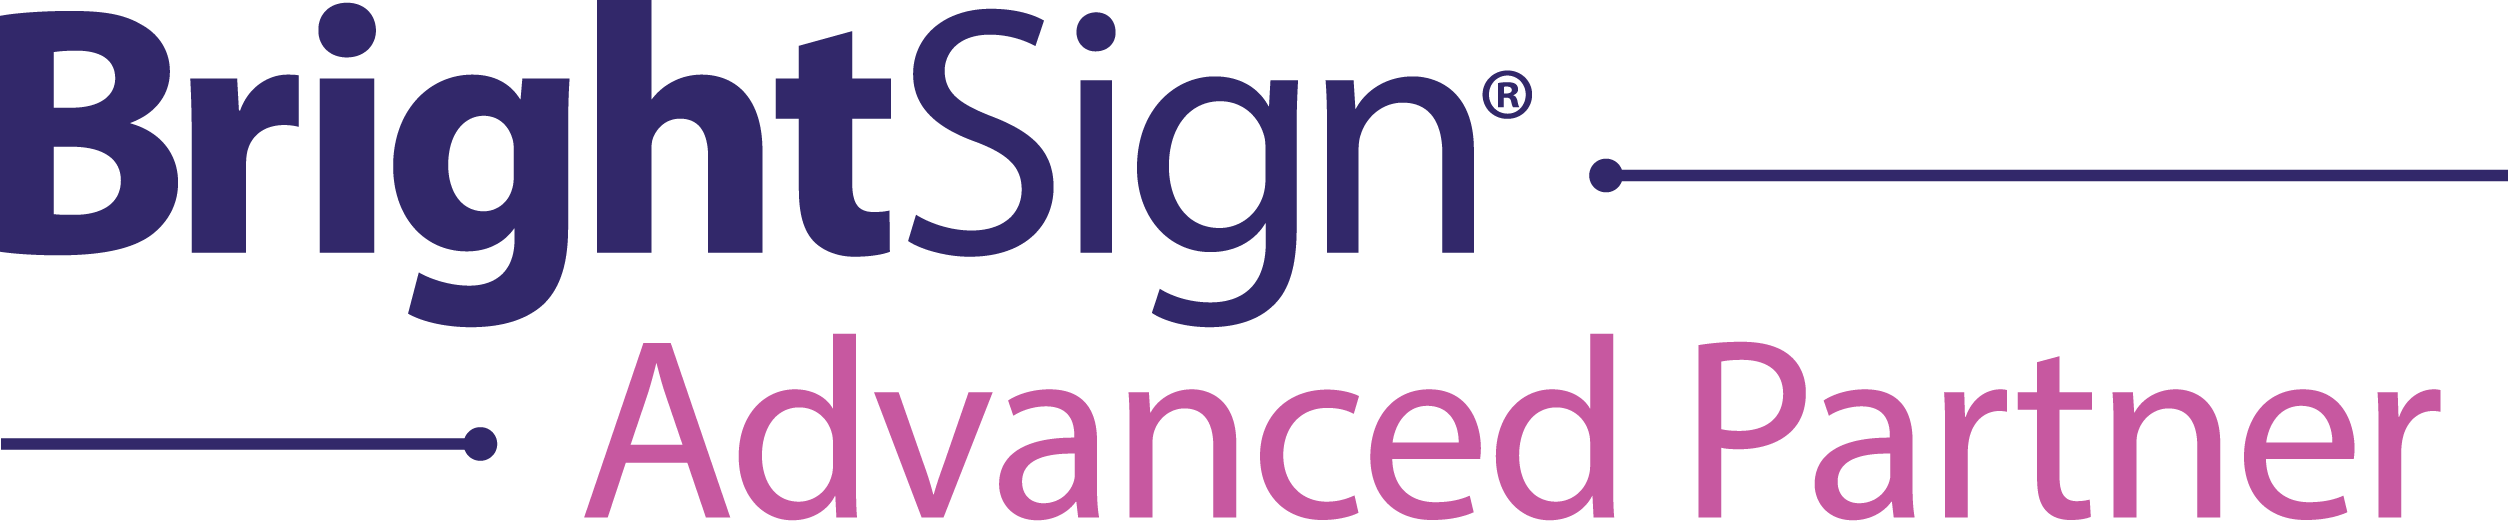 embed signage - digital signage software - BrightSign device support